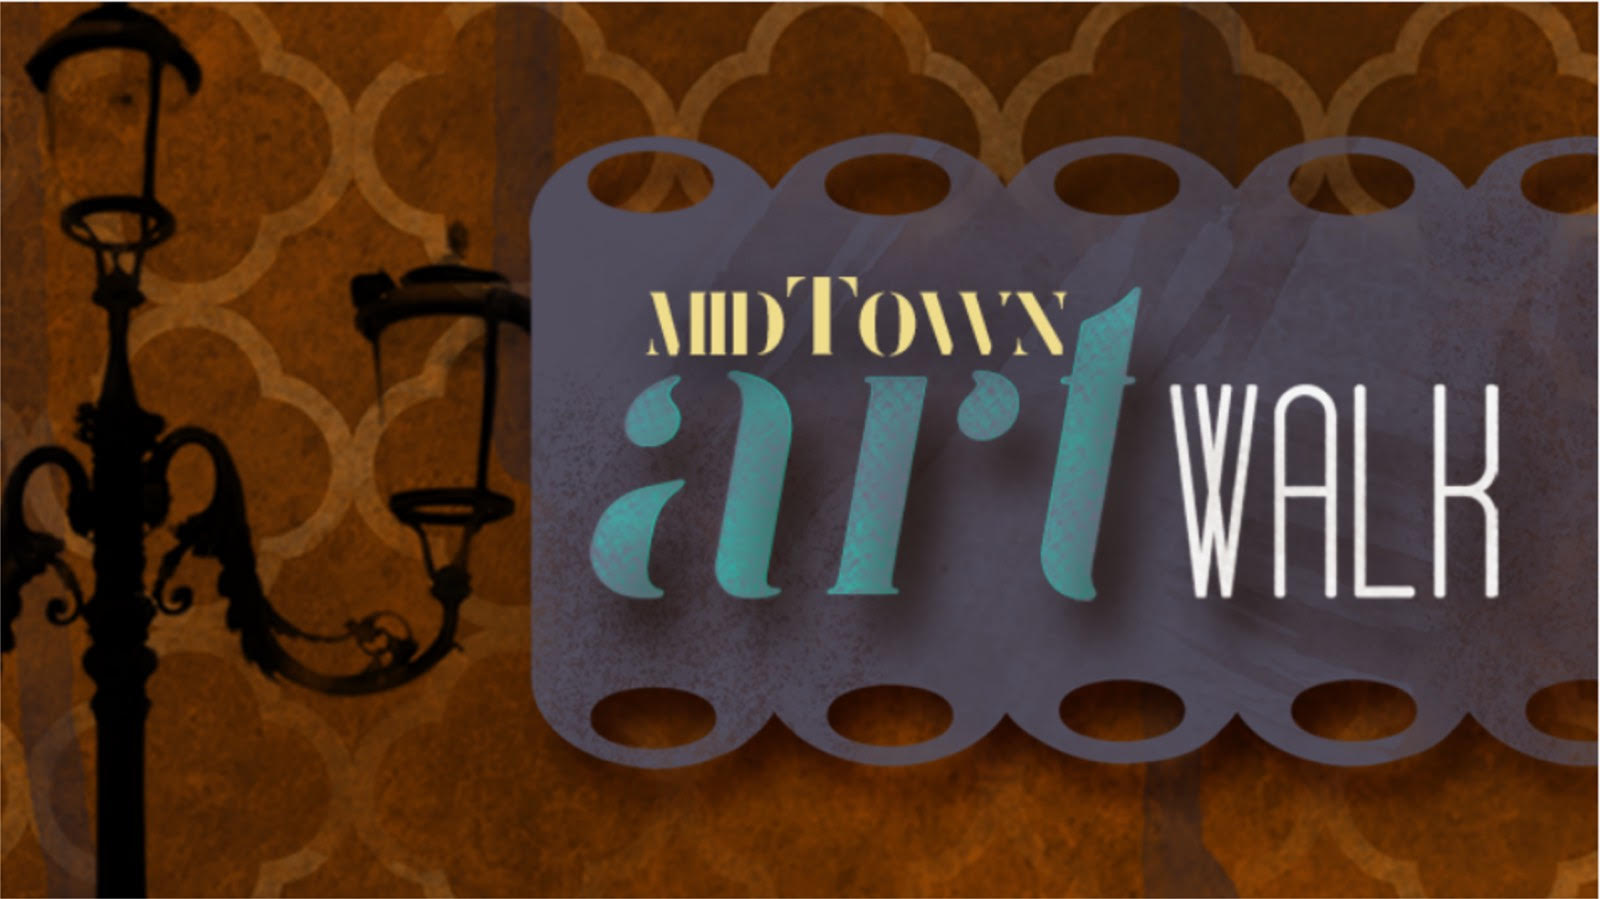 midtown art walk creative agency logo design